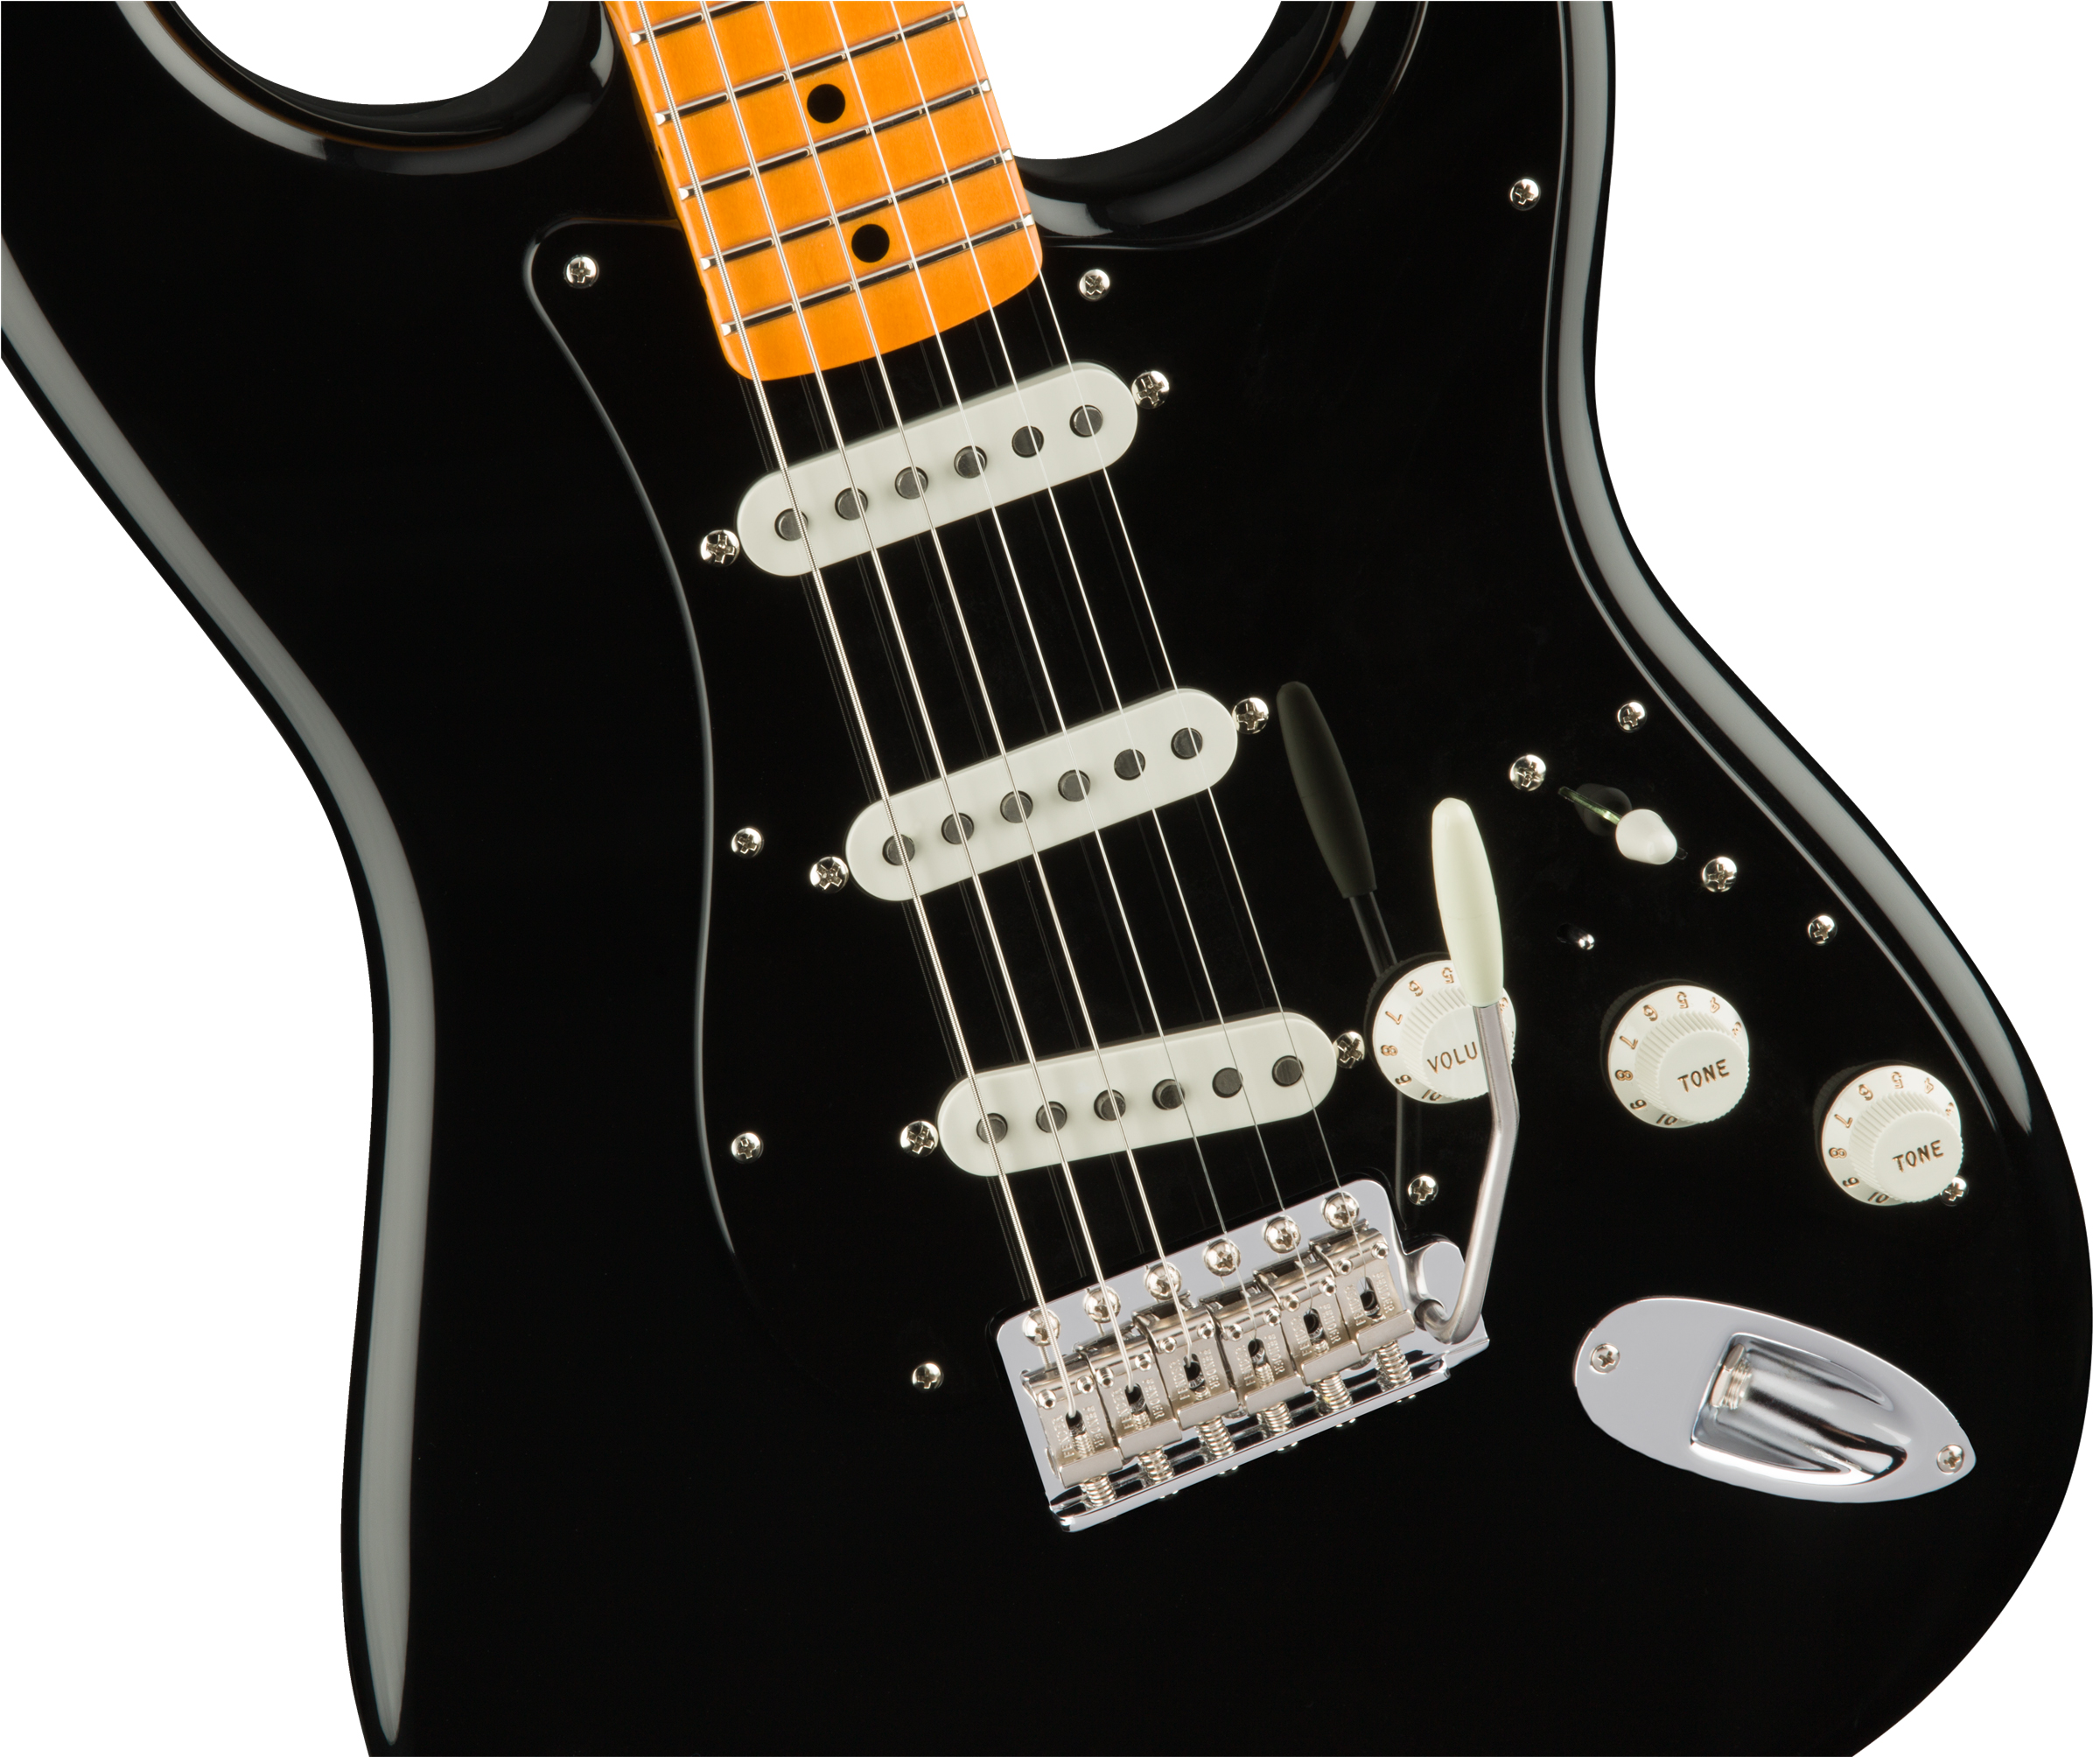 Mini Guitar Pink Floyd Collectible David Gilmour Black Fender Stratocaster